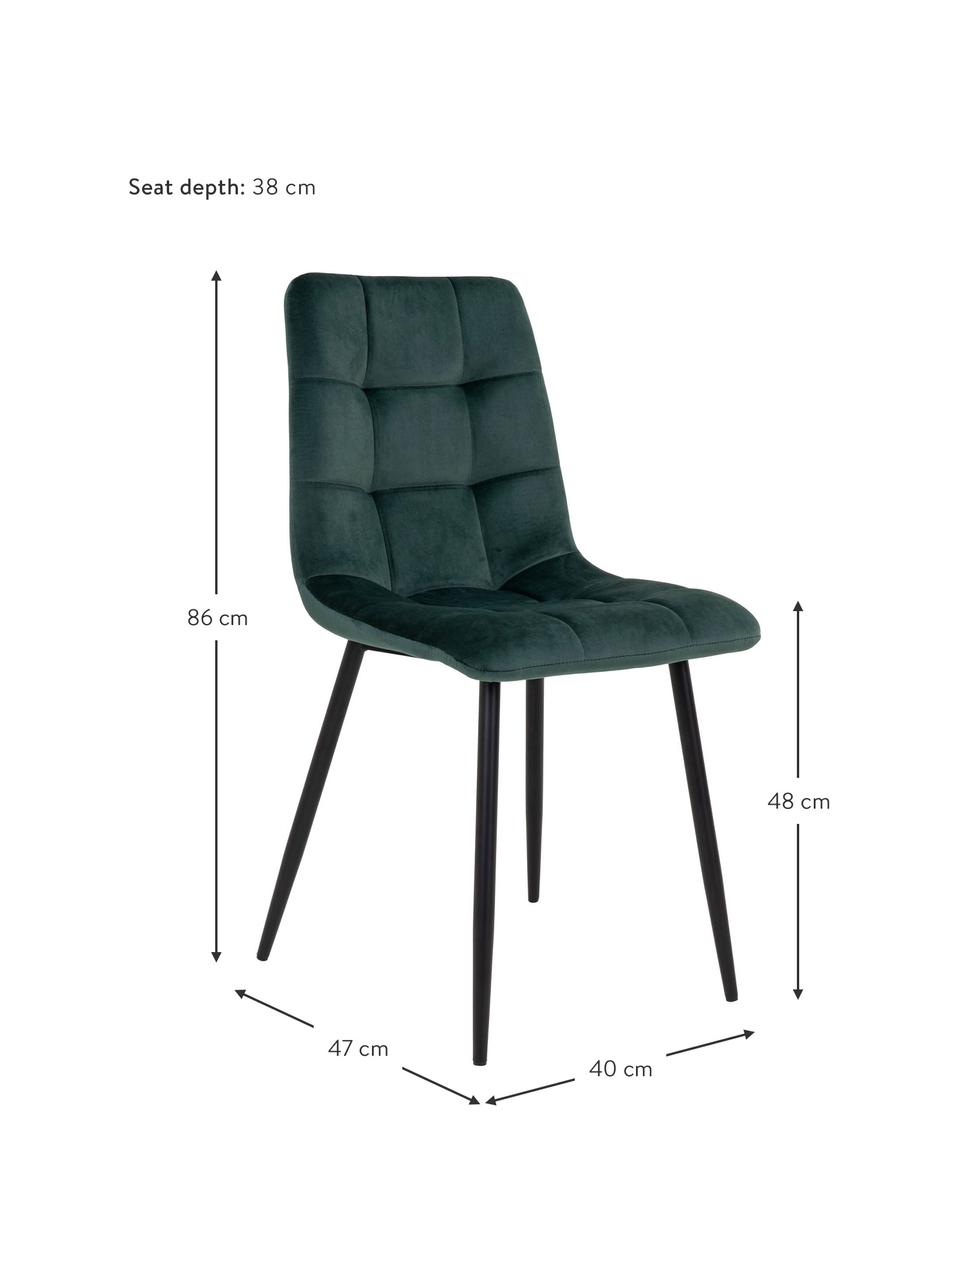 Sedia imbottita in velluto Middleton, Gambe: metallo rivestito, Verde scuro, nero, Larg. 44 x Alt. 55 cm